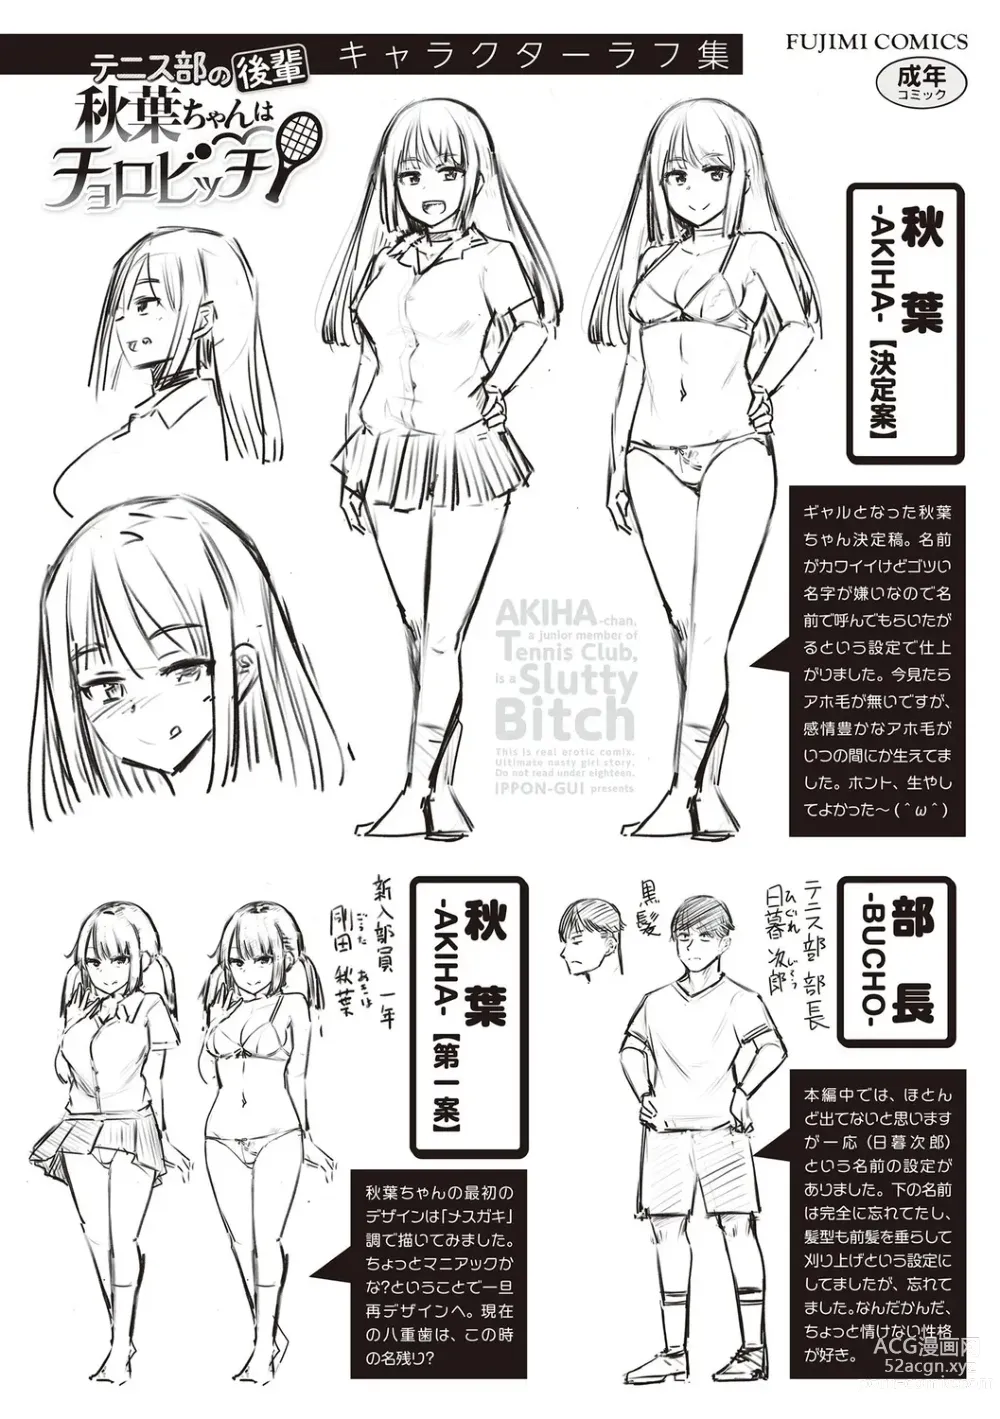 Page 305 of manga Tenisu-bu no Kouhai Akiba-chan wa Inran (Choro) Bitch